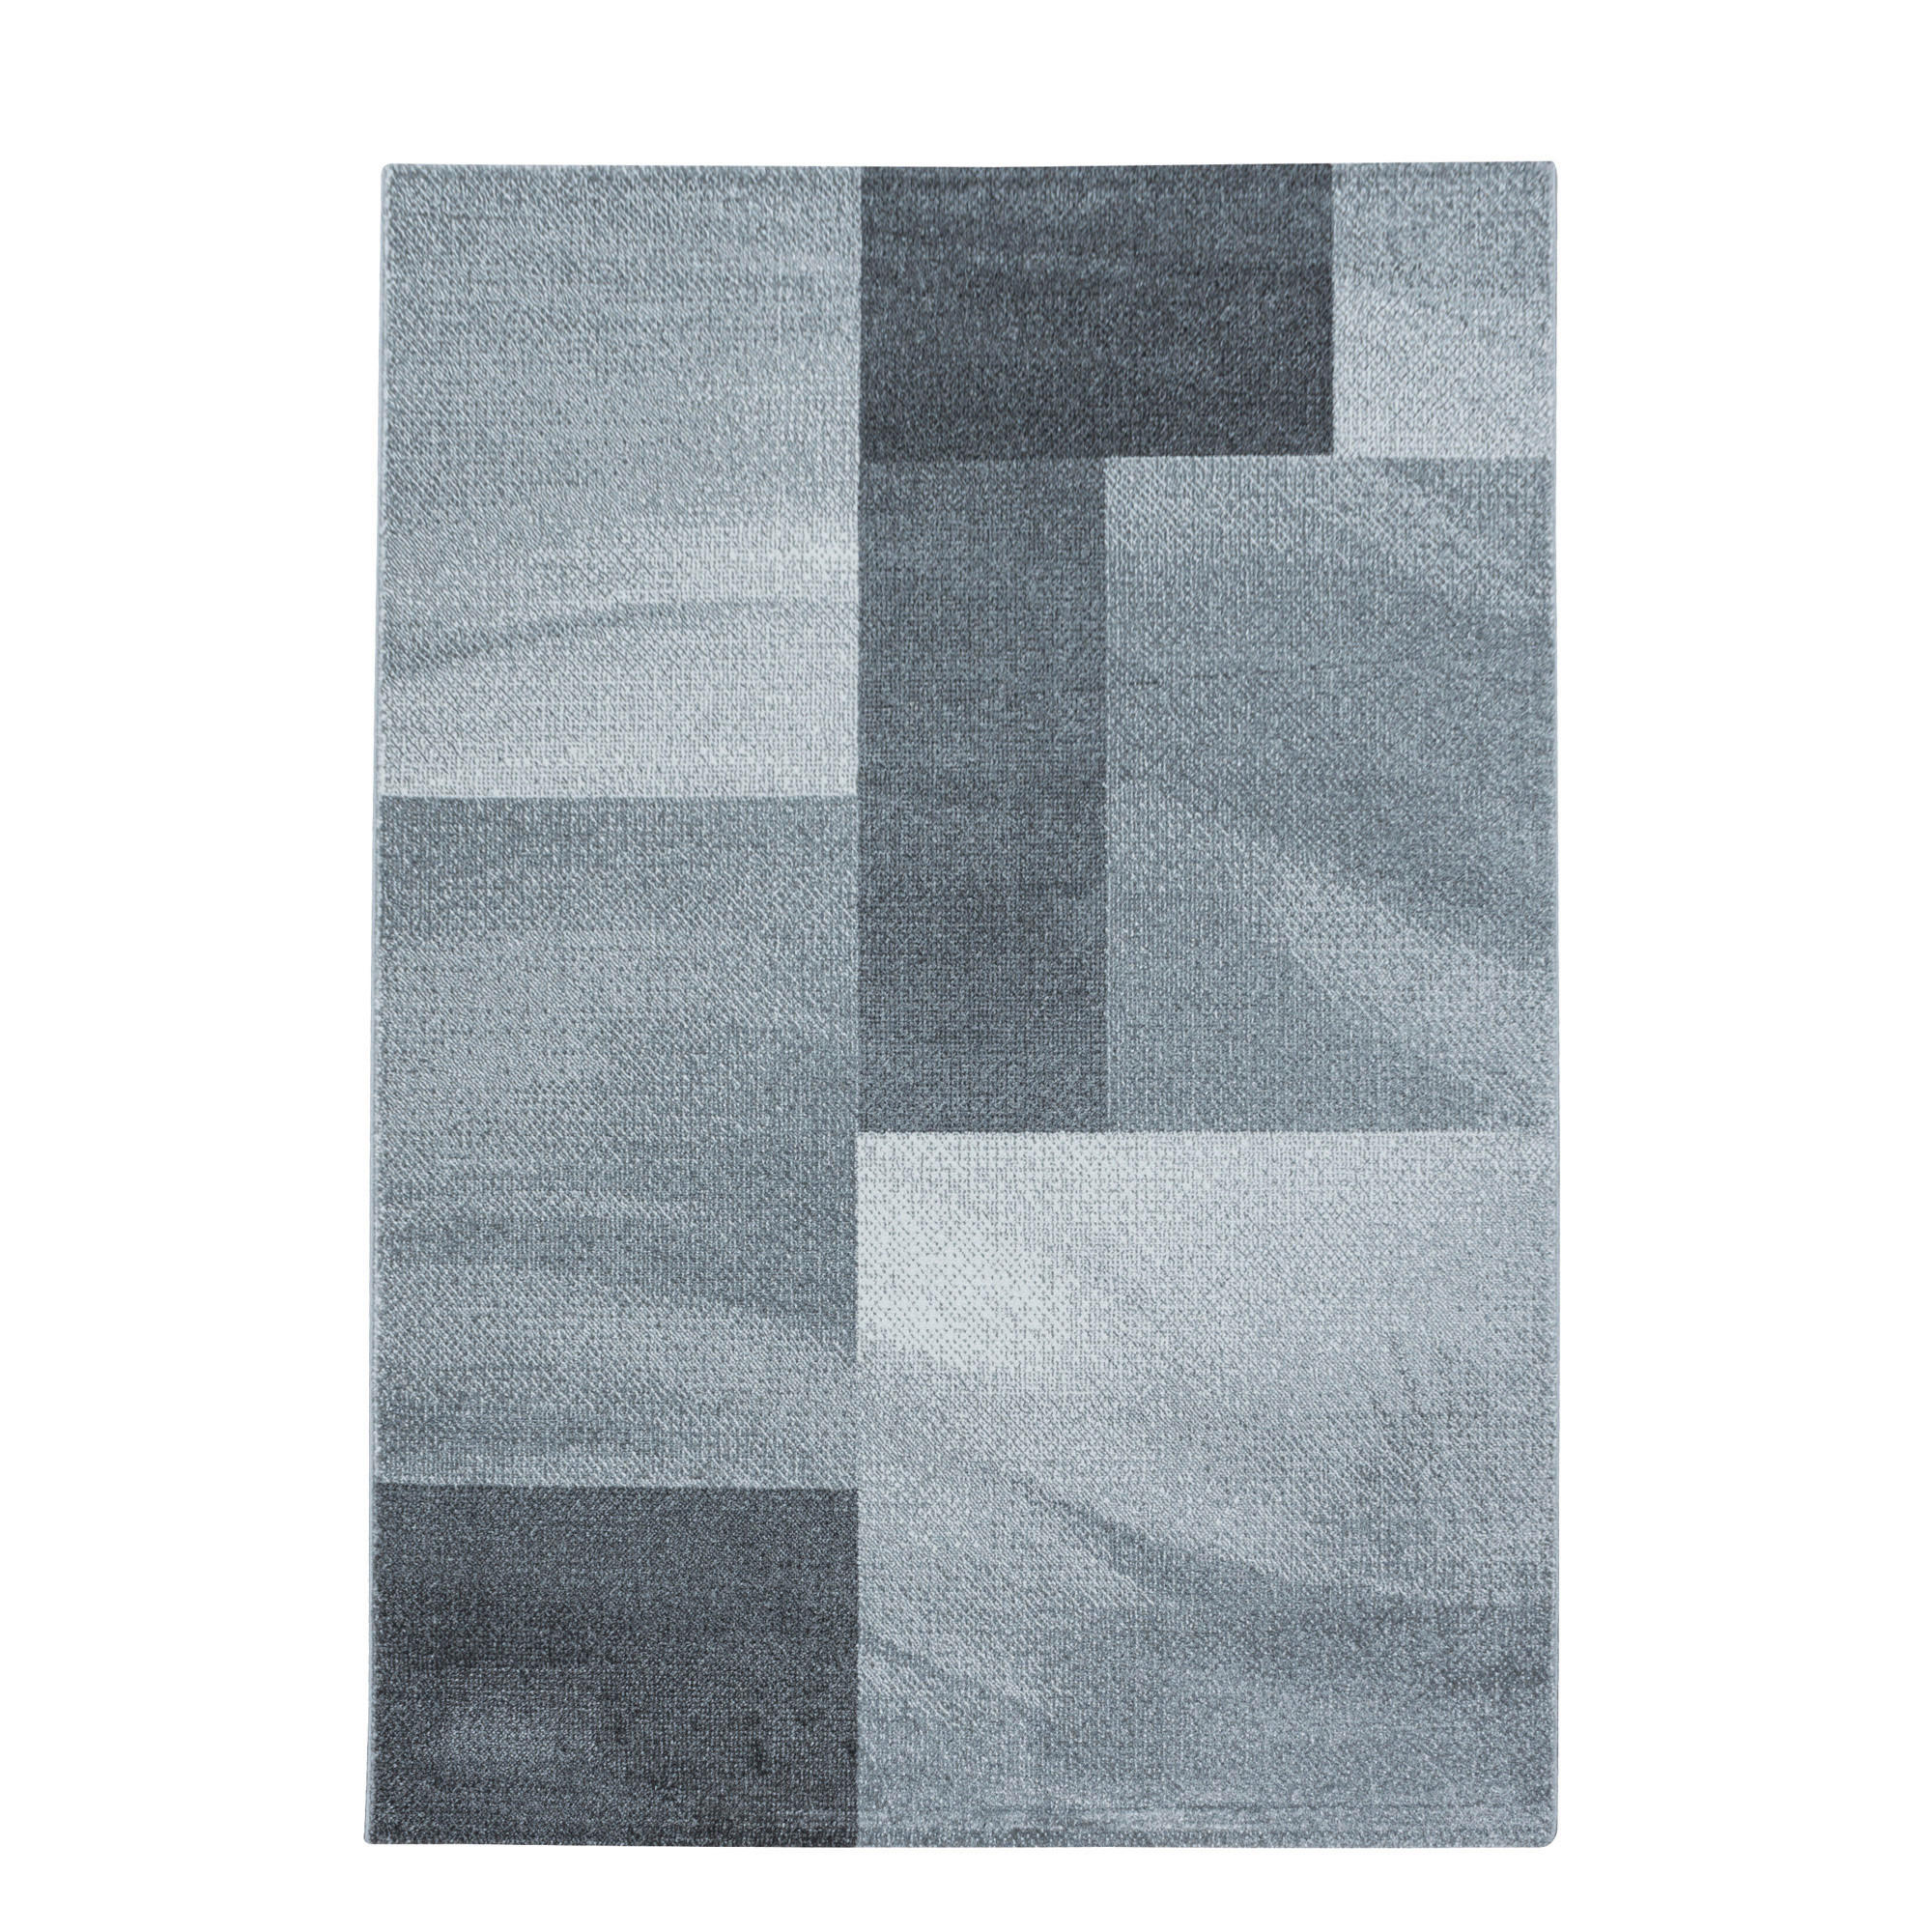 WEBTEPPICH  140/200 cm  Grau   - Grau, Basics, Textil (140/200cm) - Novel